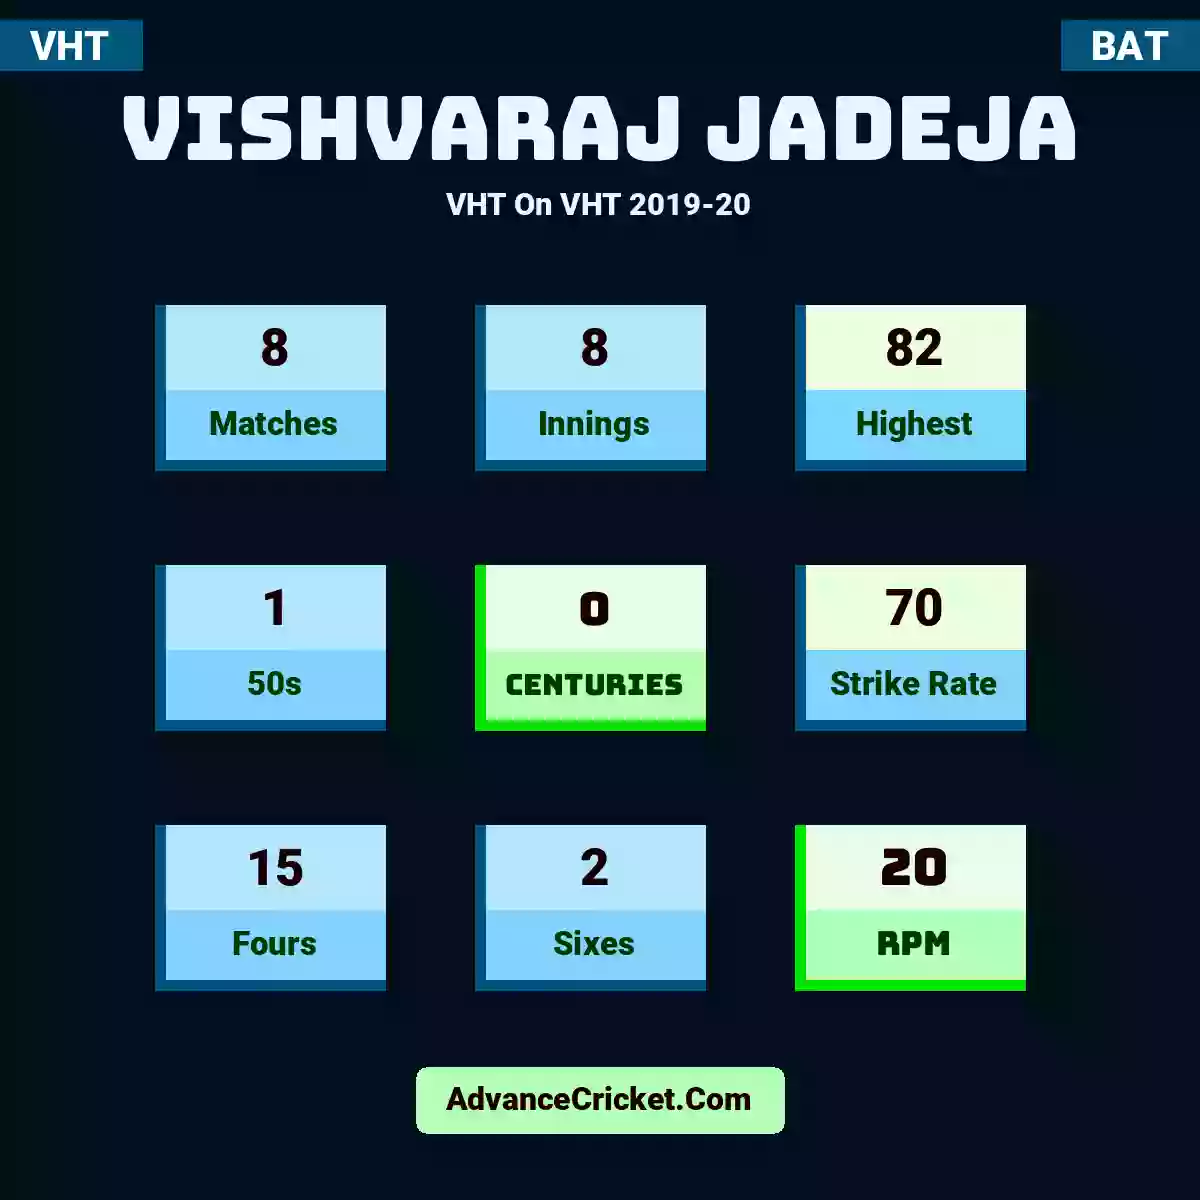 Vishvaraj Jadeja VHT  On VHT 2019-20, Vishvaraj Jadeja played 8 matches, scored 82 runs as highest, 1 half-centuries, and 0 centuries, with a strike rate of 70. V.Jadeja hit 15 fours and 2 sixes, with an RPM of 20.